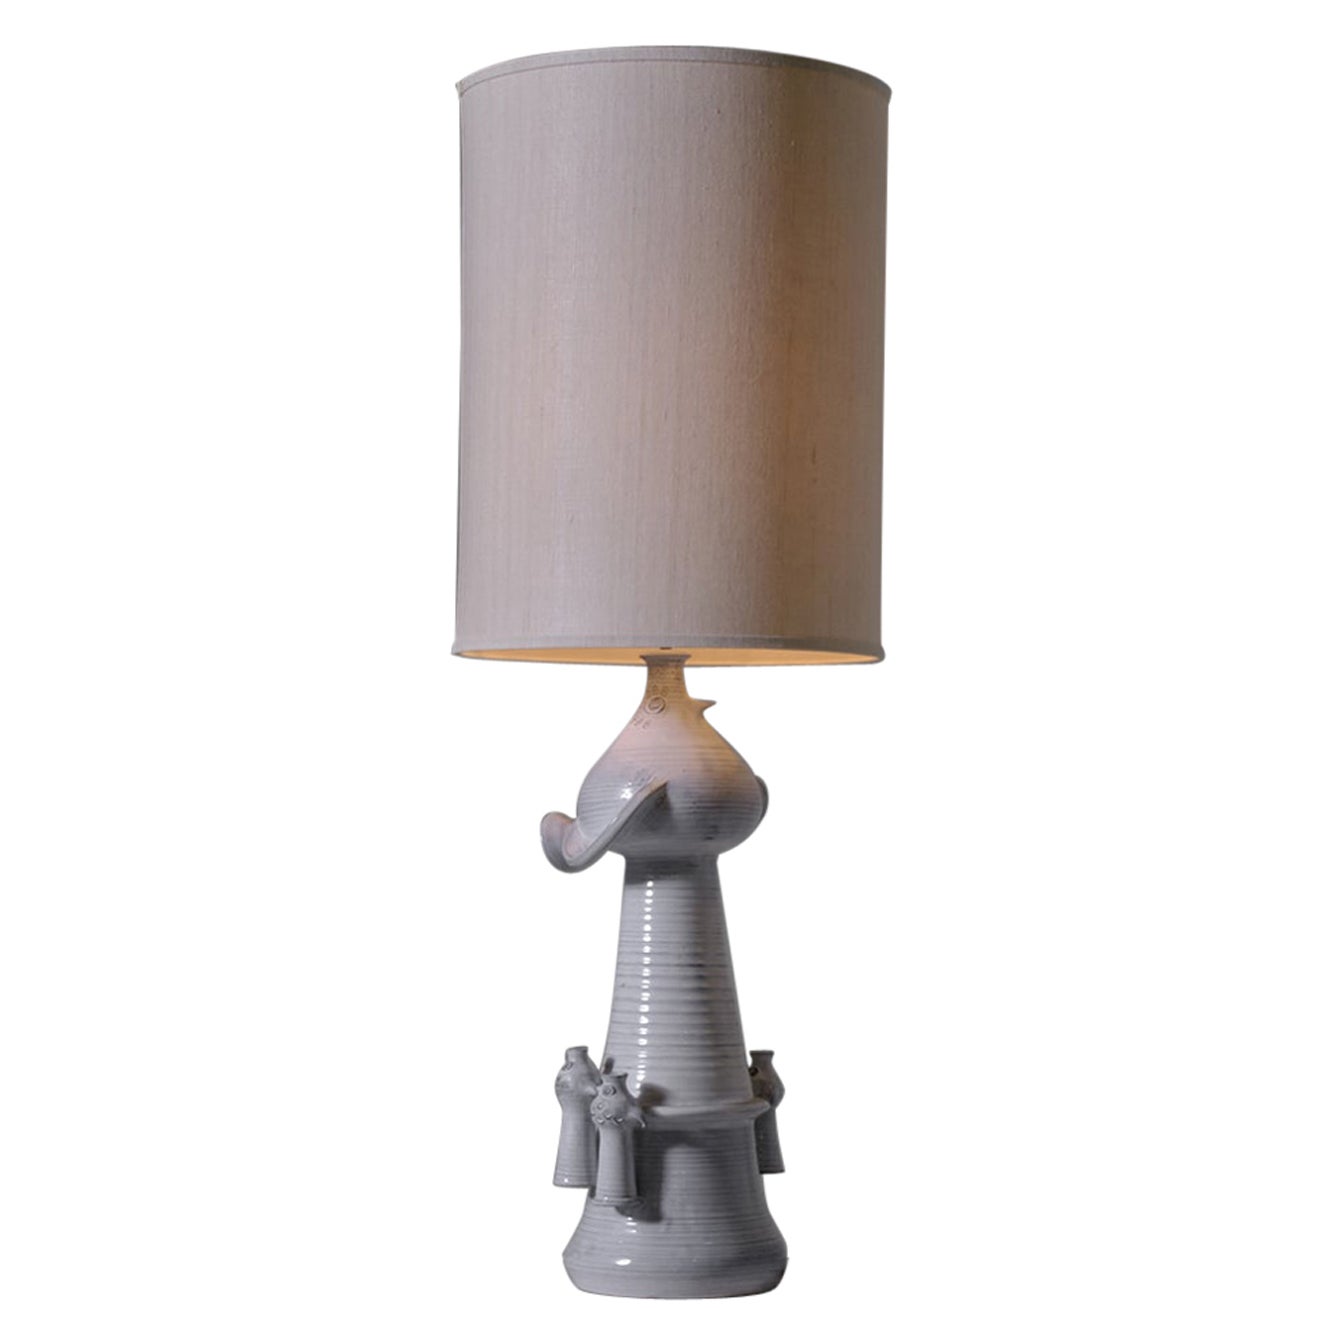 Jacques Ibarra XL Ceramic ‘Oiseau’ Lamp, France, 1960s For Sale